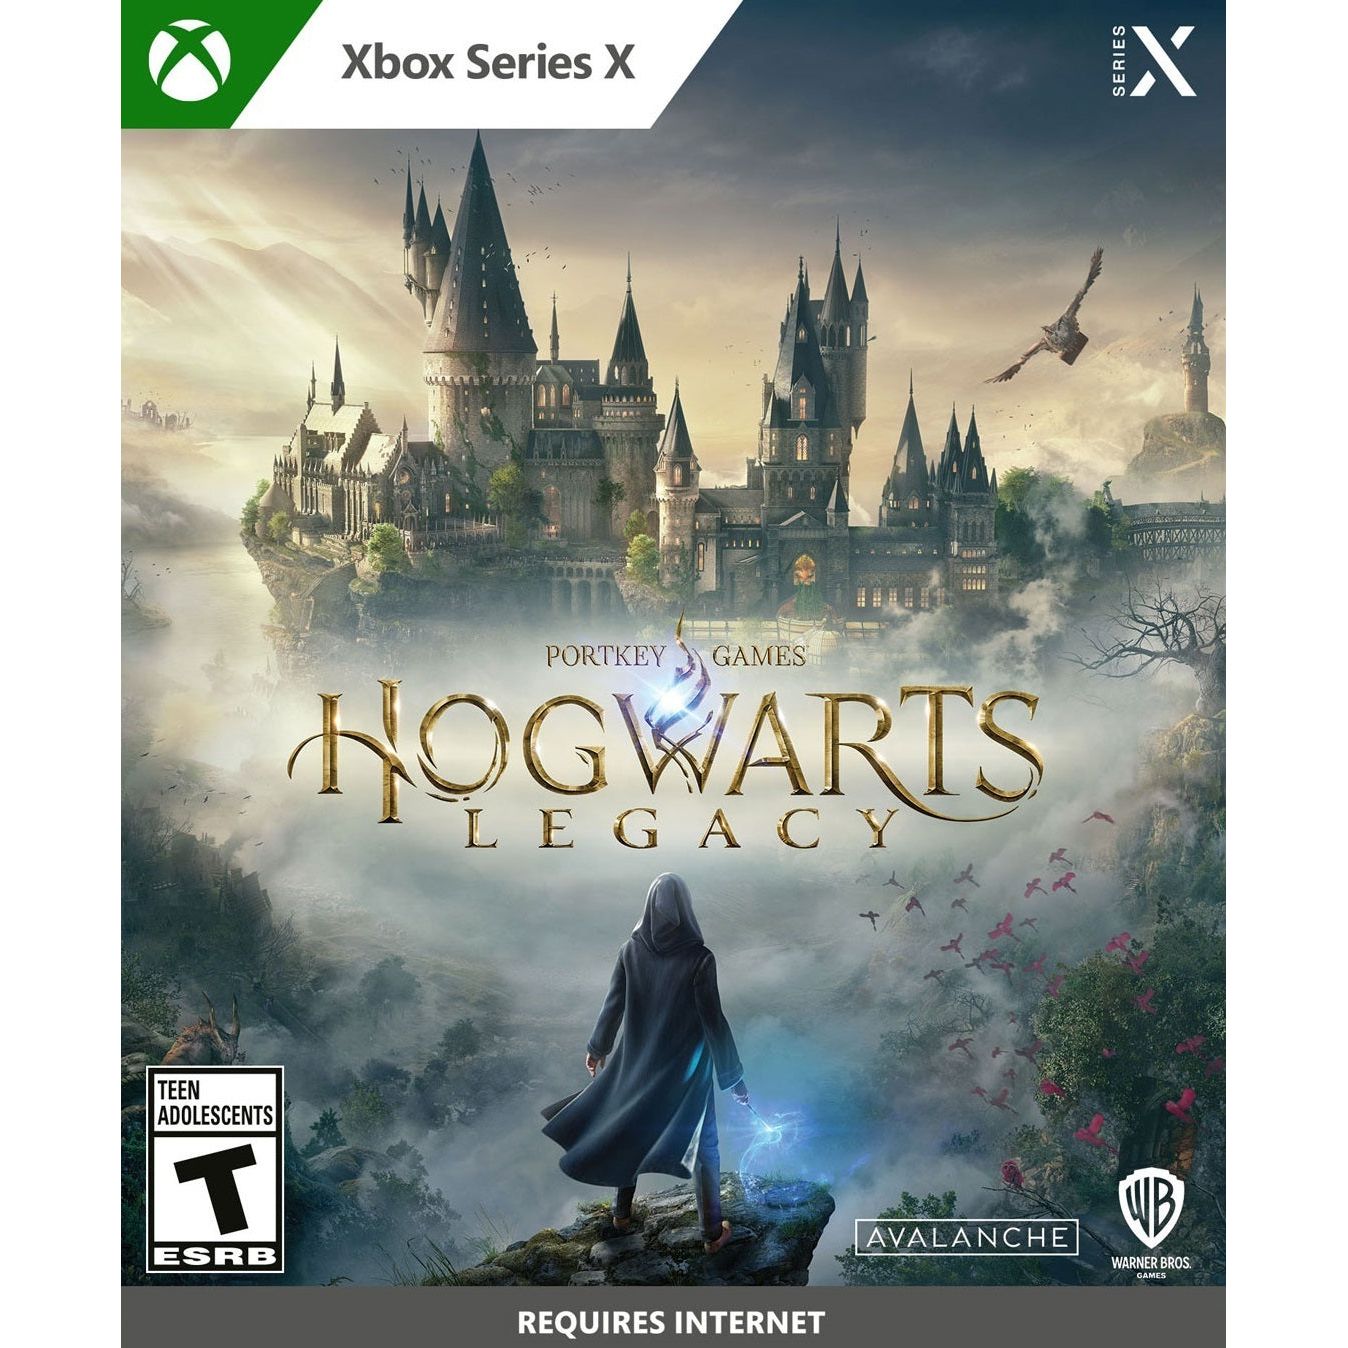 Xbox Series X - Hogwarts Legacy